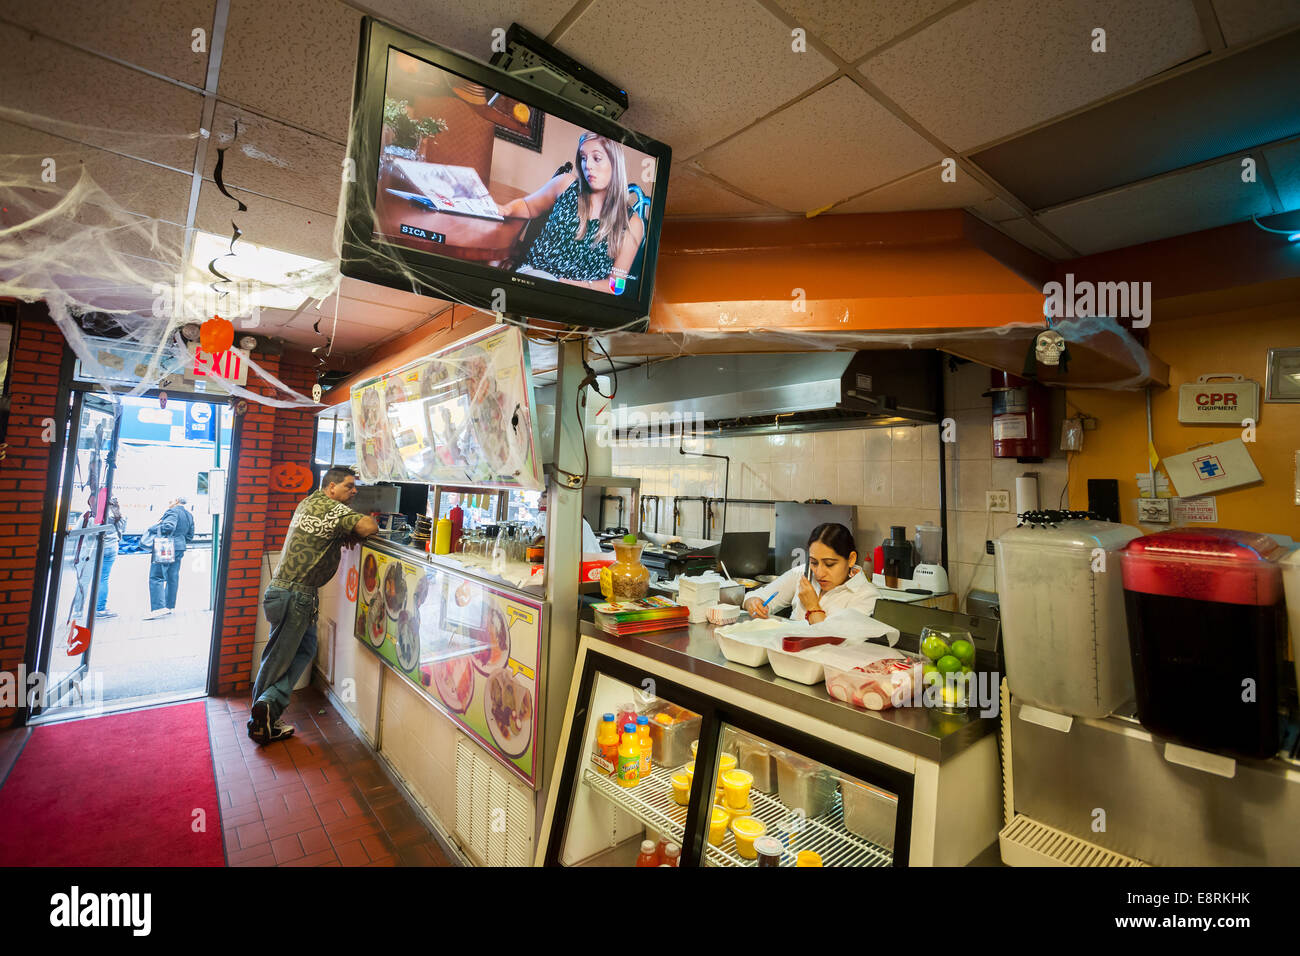 Telenovelas (telenovelas hispanas) reproducir en un televisor en un restaurante Hispano en la comunidad de Jackson Heights. Foto de stock